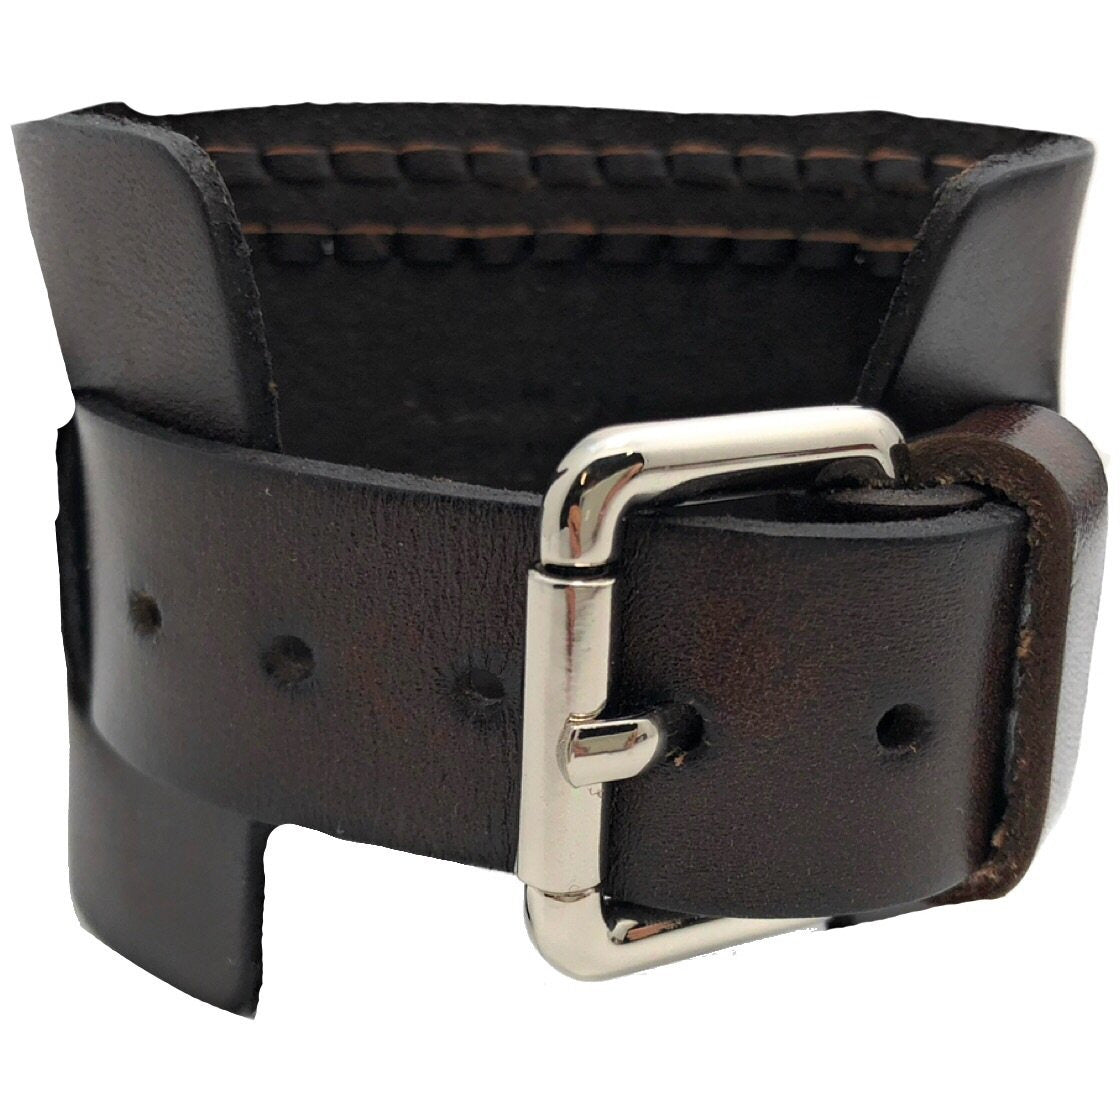 Teardrop Silver Watch with Weaved Black Leather Wide Cuff